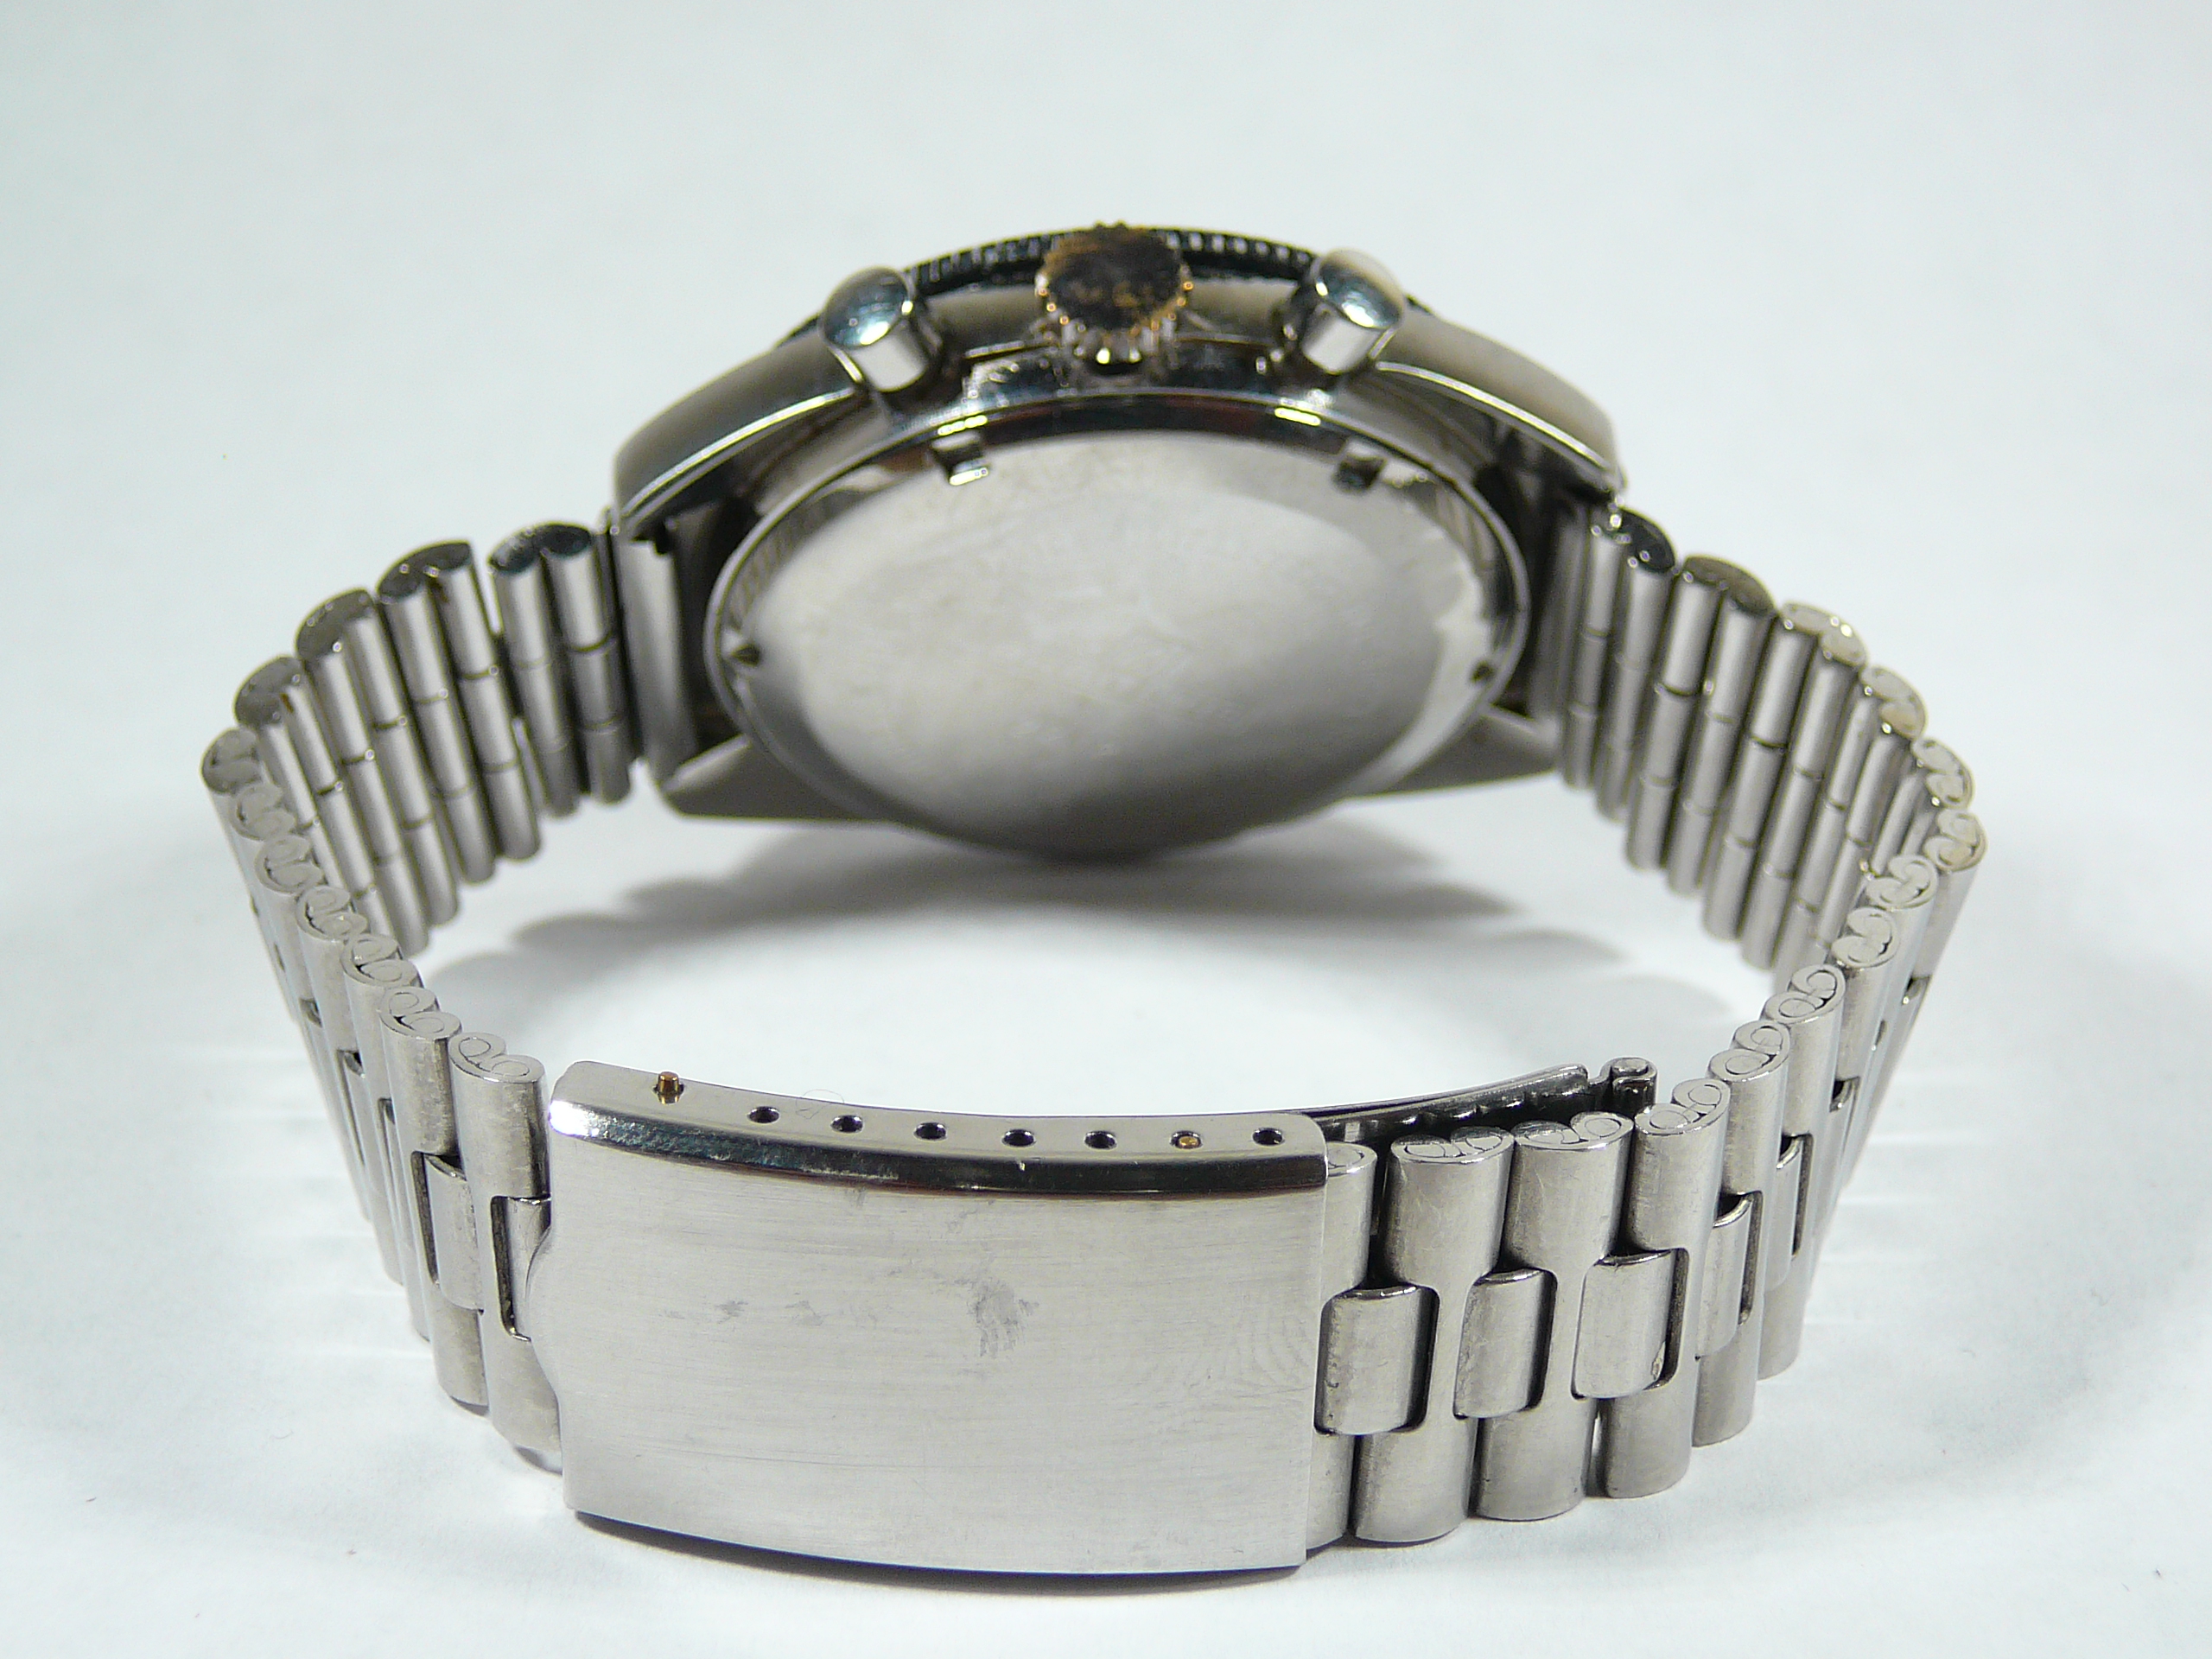 Gents Vintage Breitling Wrist Watch - Image 3 of 3